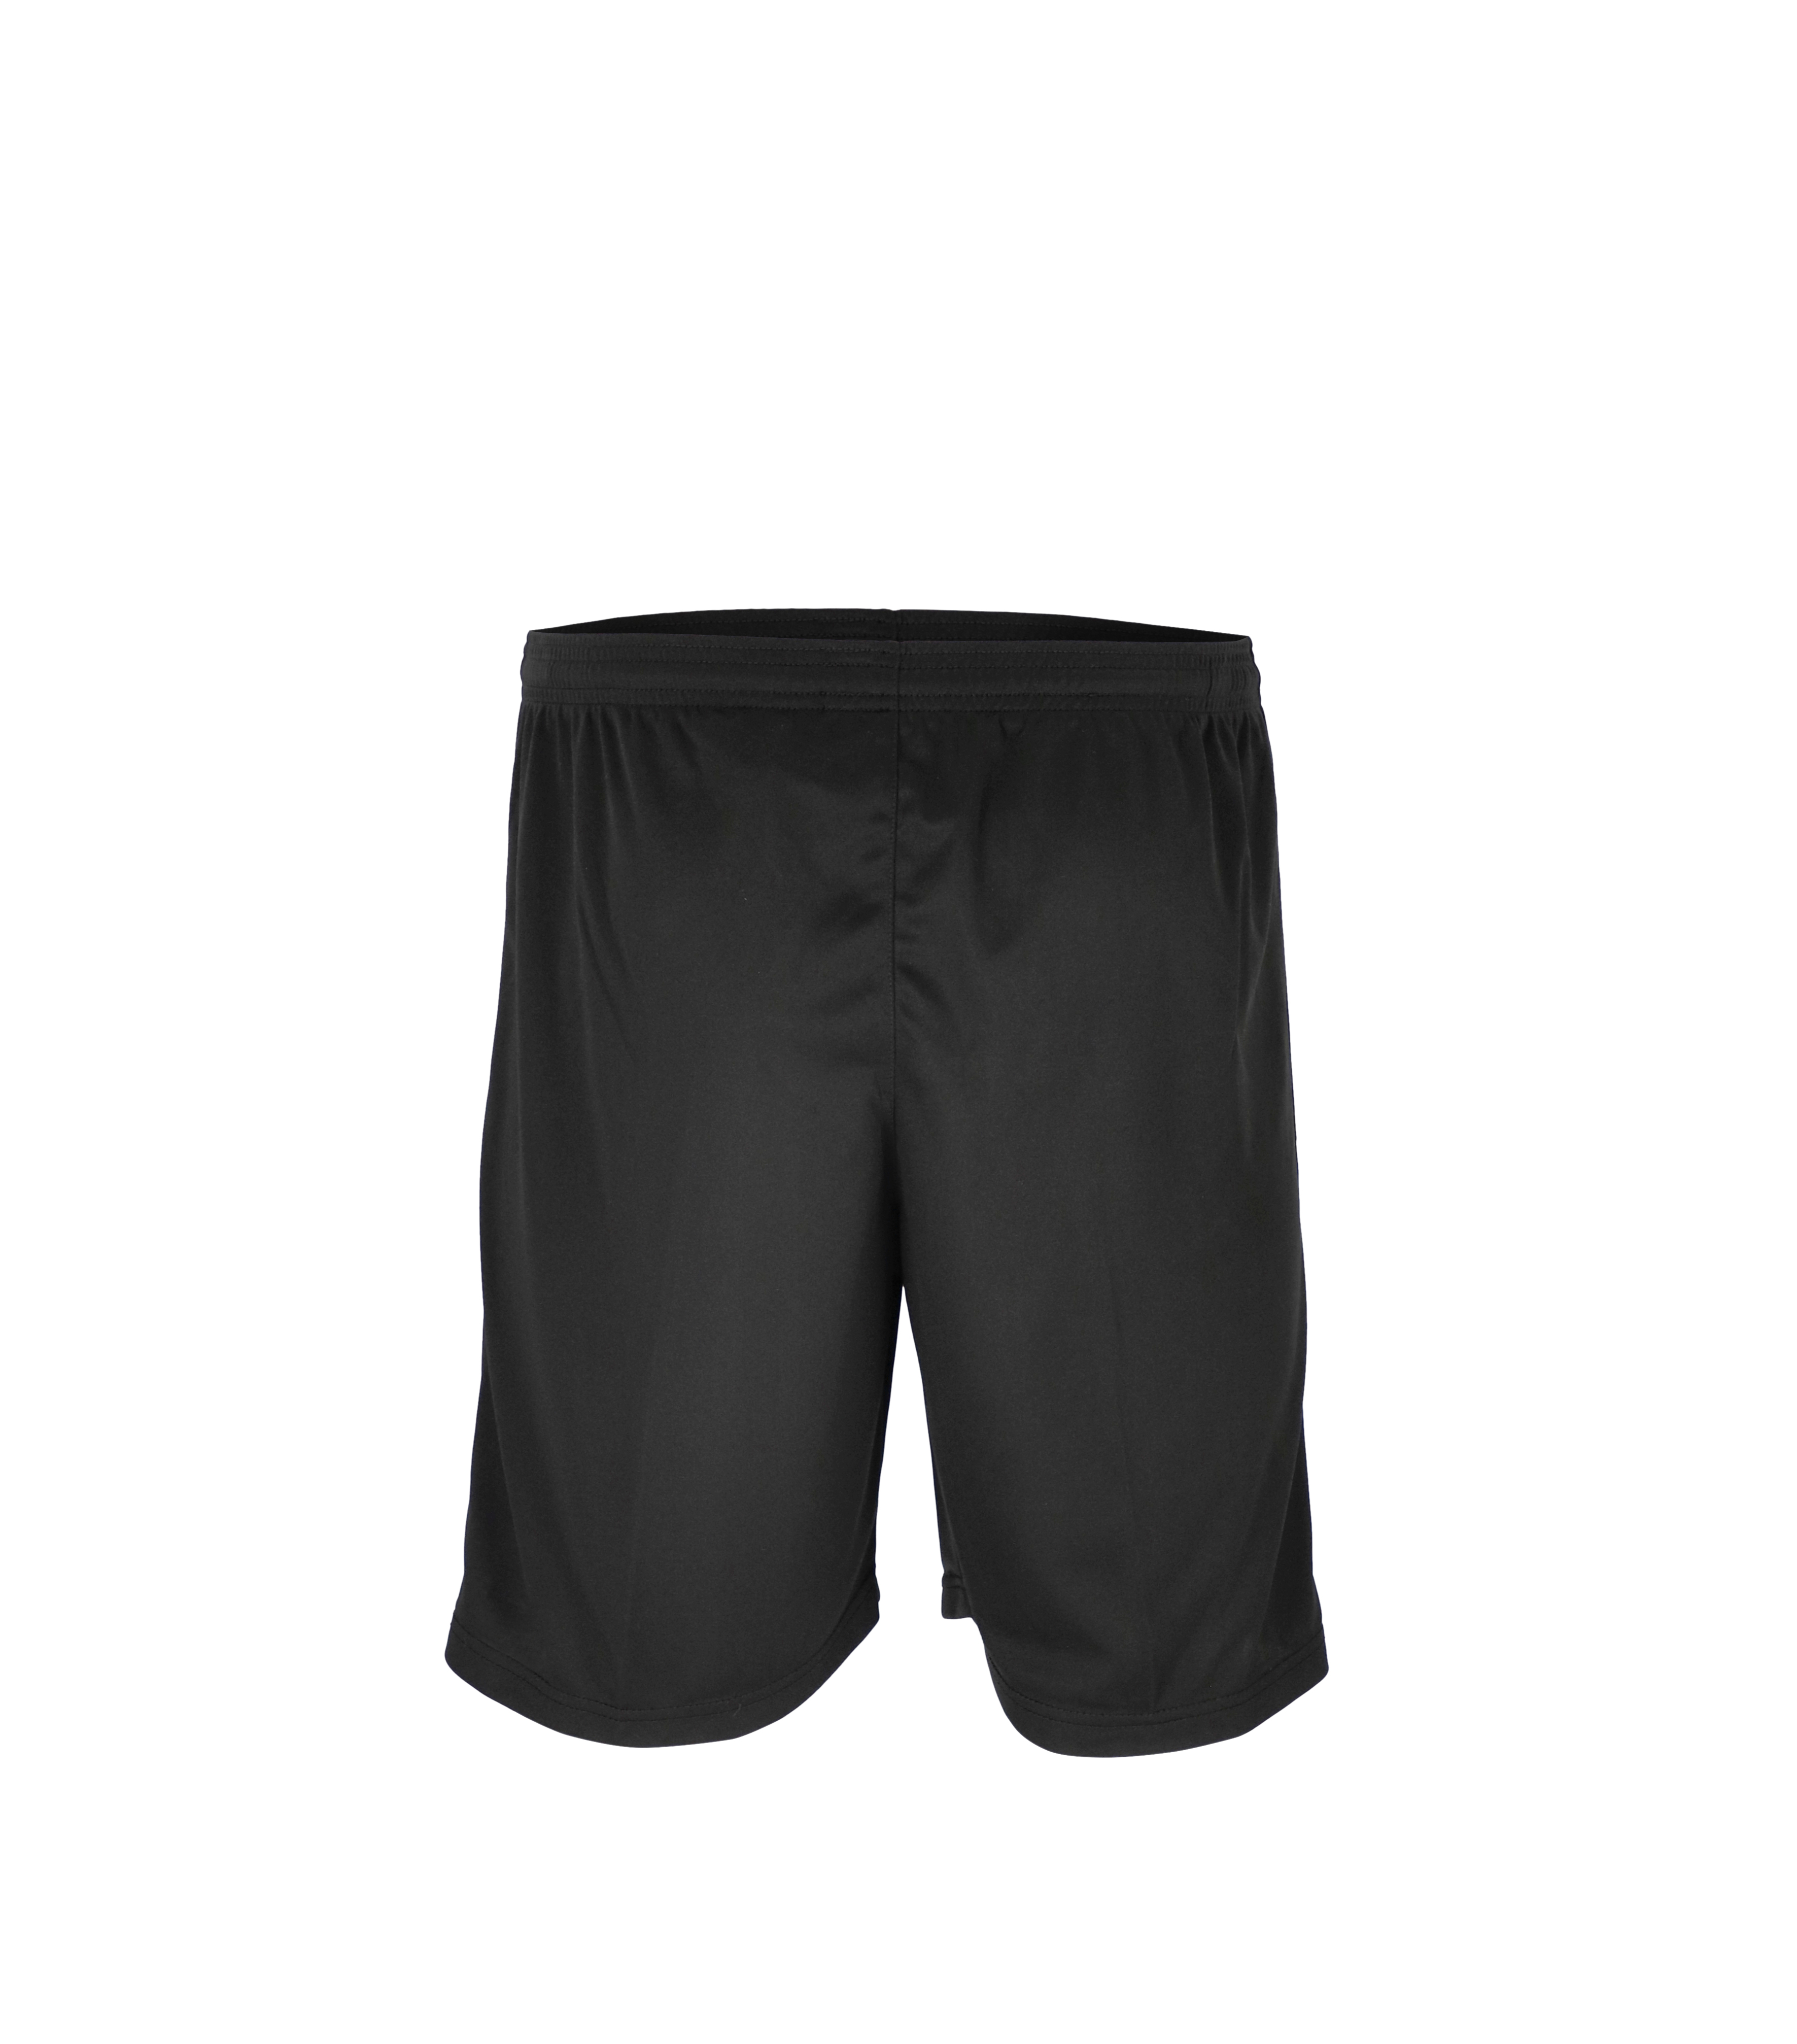 LOKAR Shorts | Acerbis sport